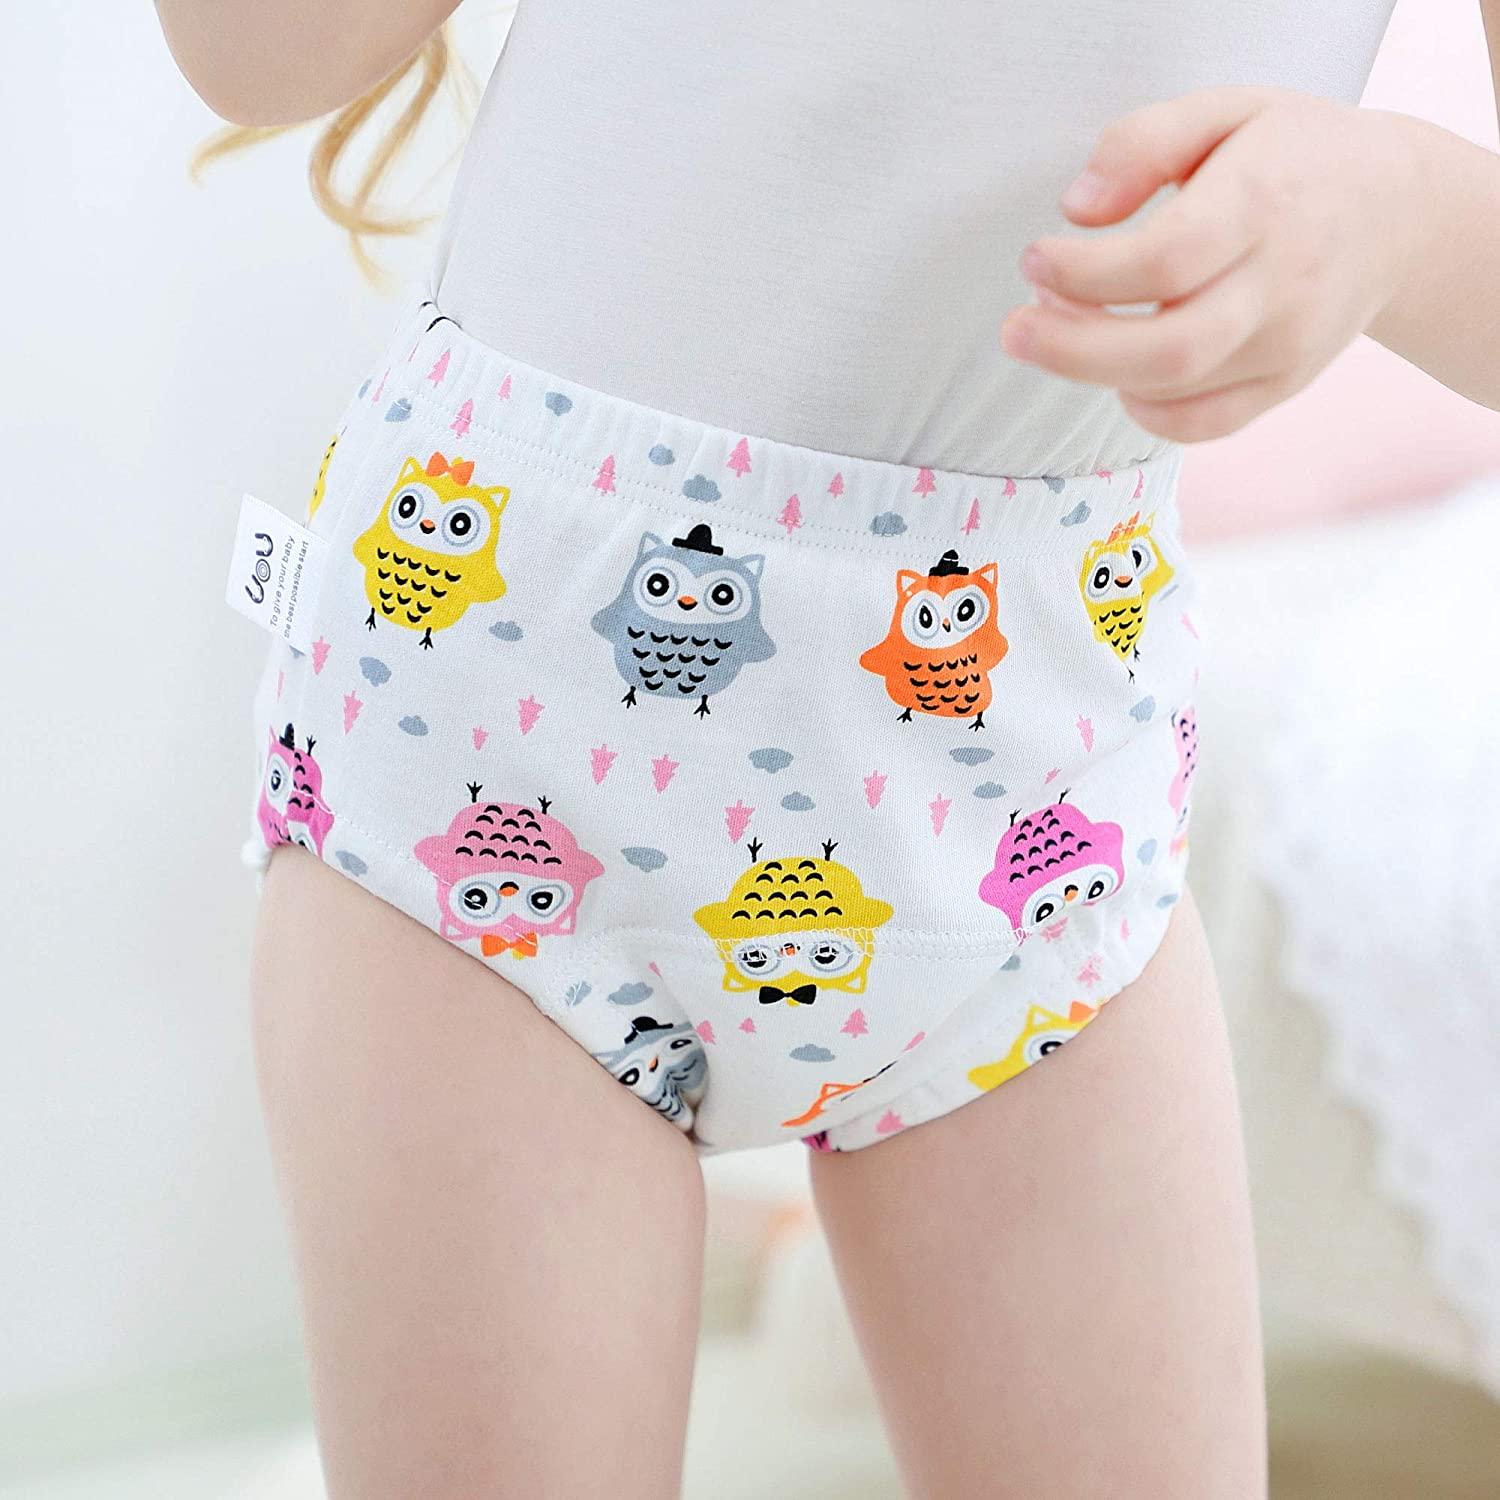 Little Girls Underwear 100% Cotton Cute Children Panty Models Images